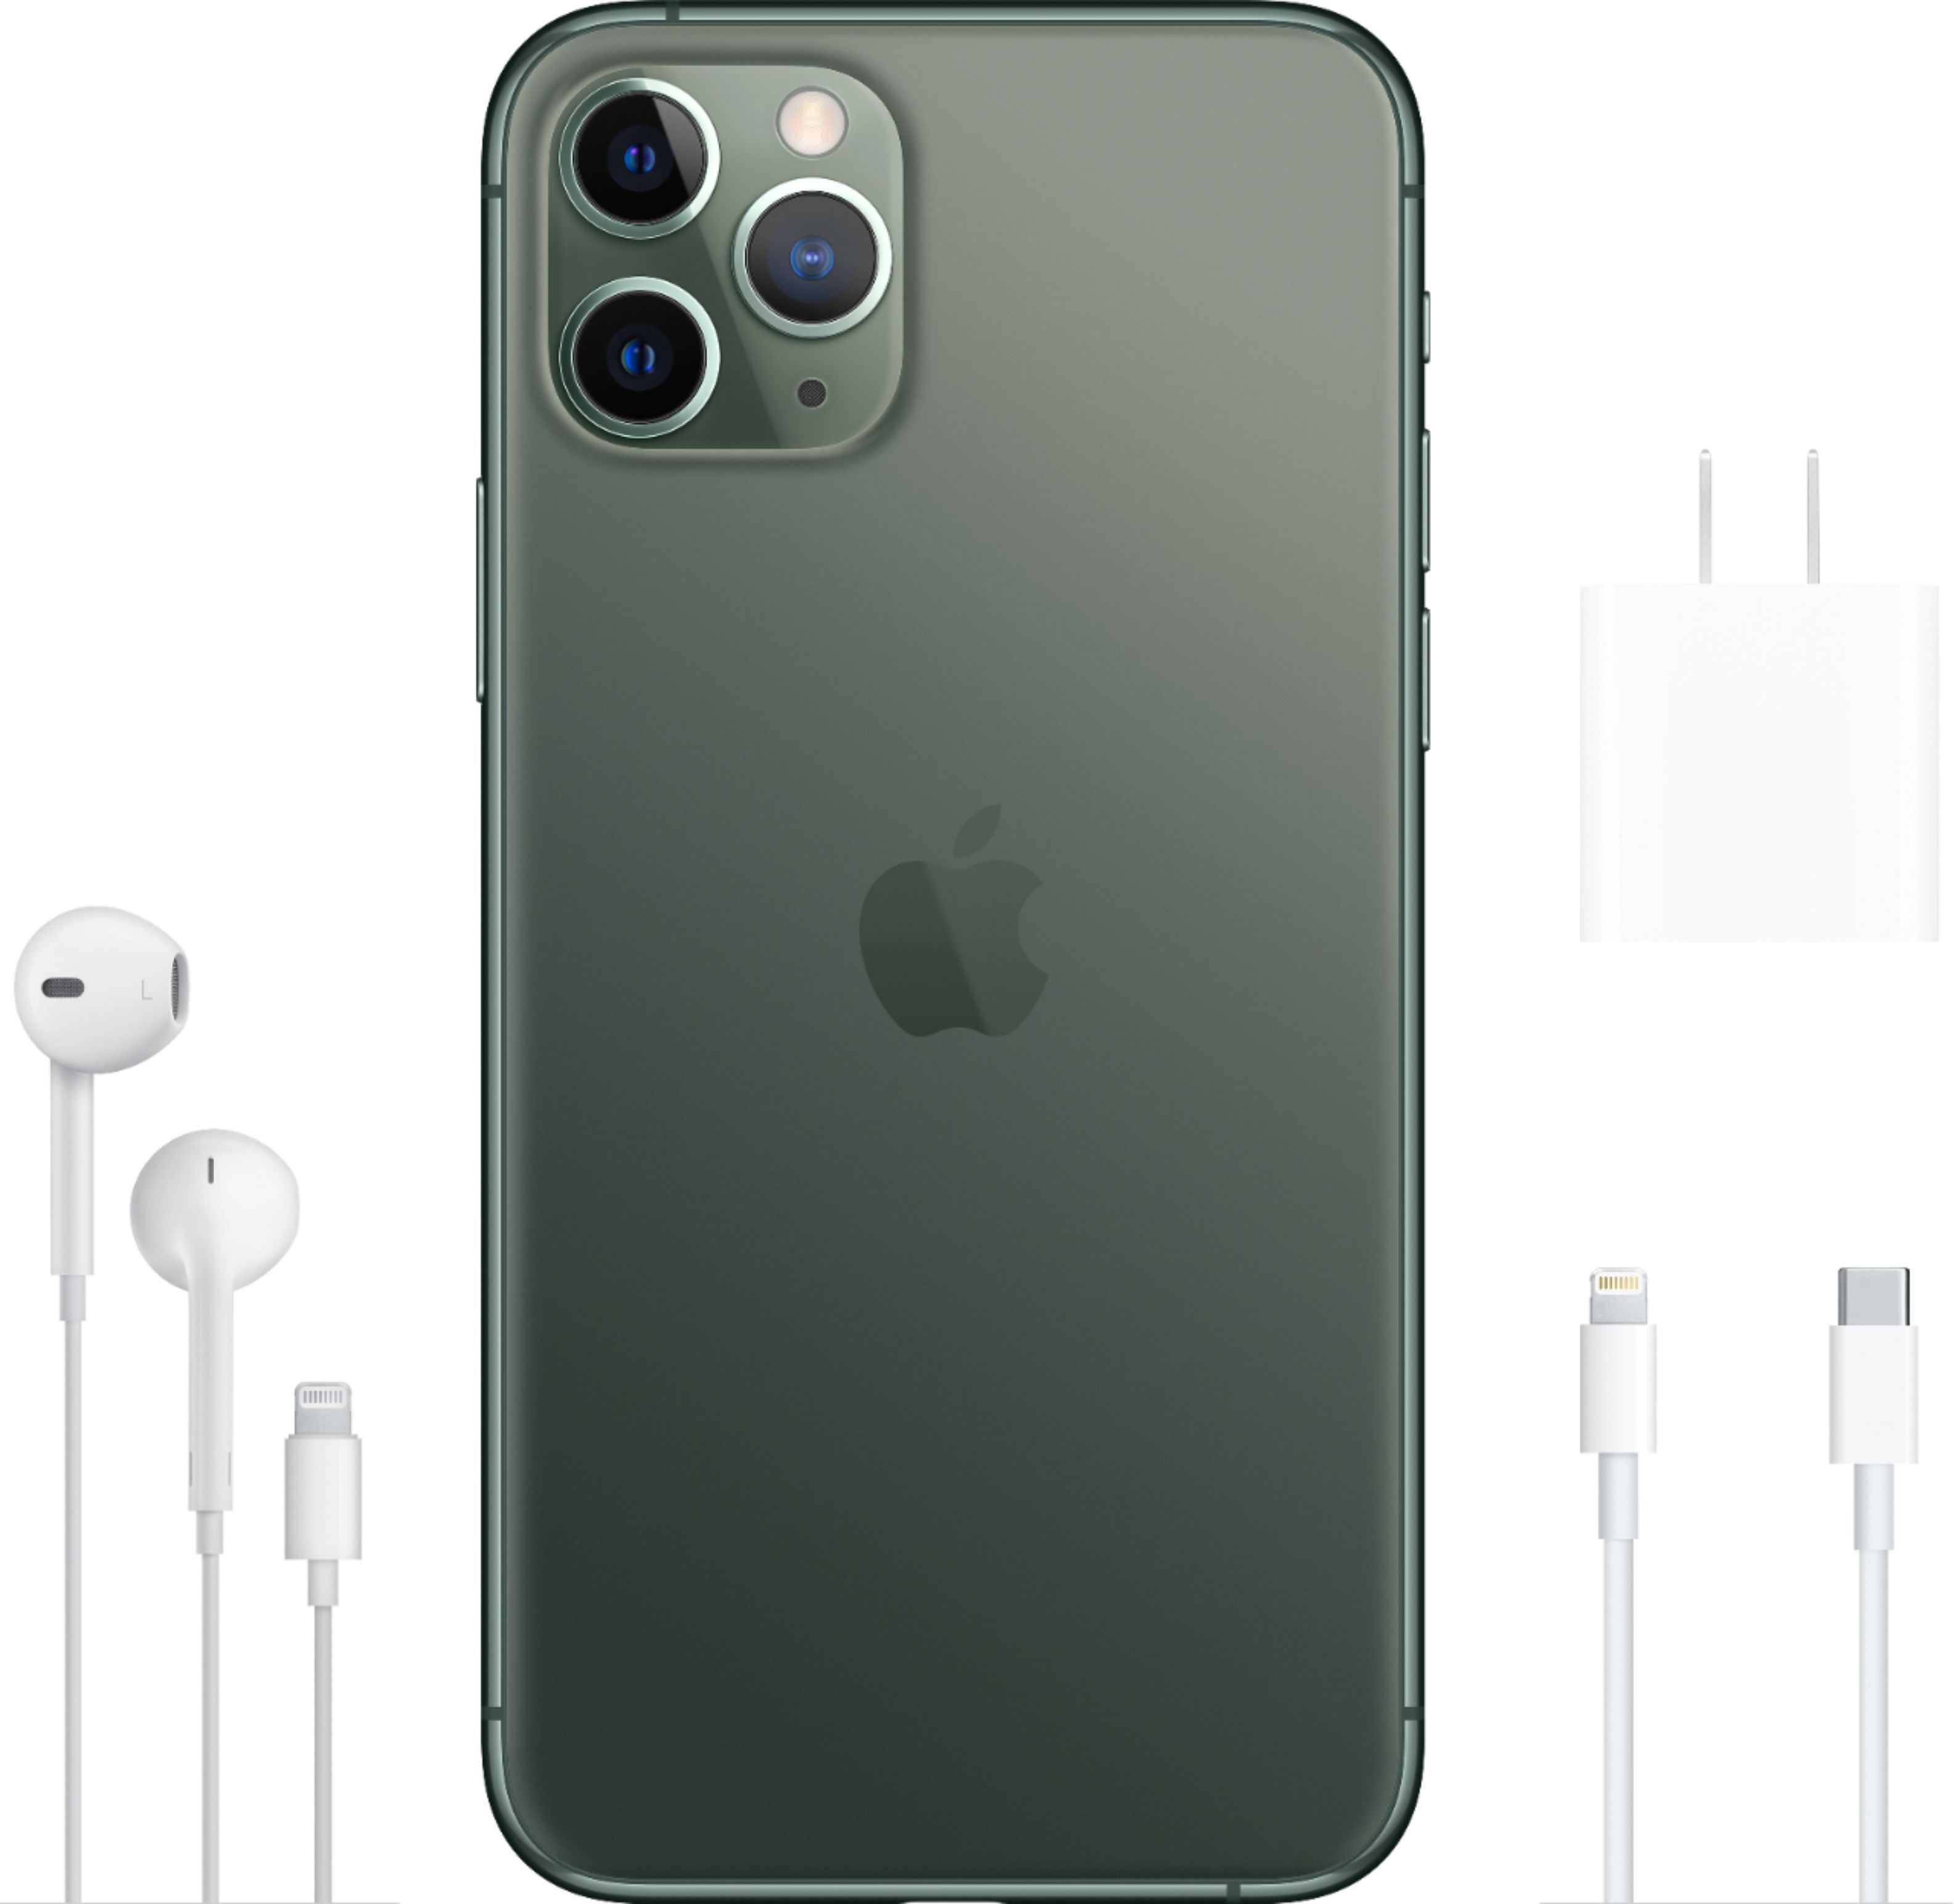 Apple Iphone 11 Pro 256gb Midnight Green At T Mwcq2ll A Best Buy